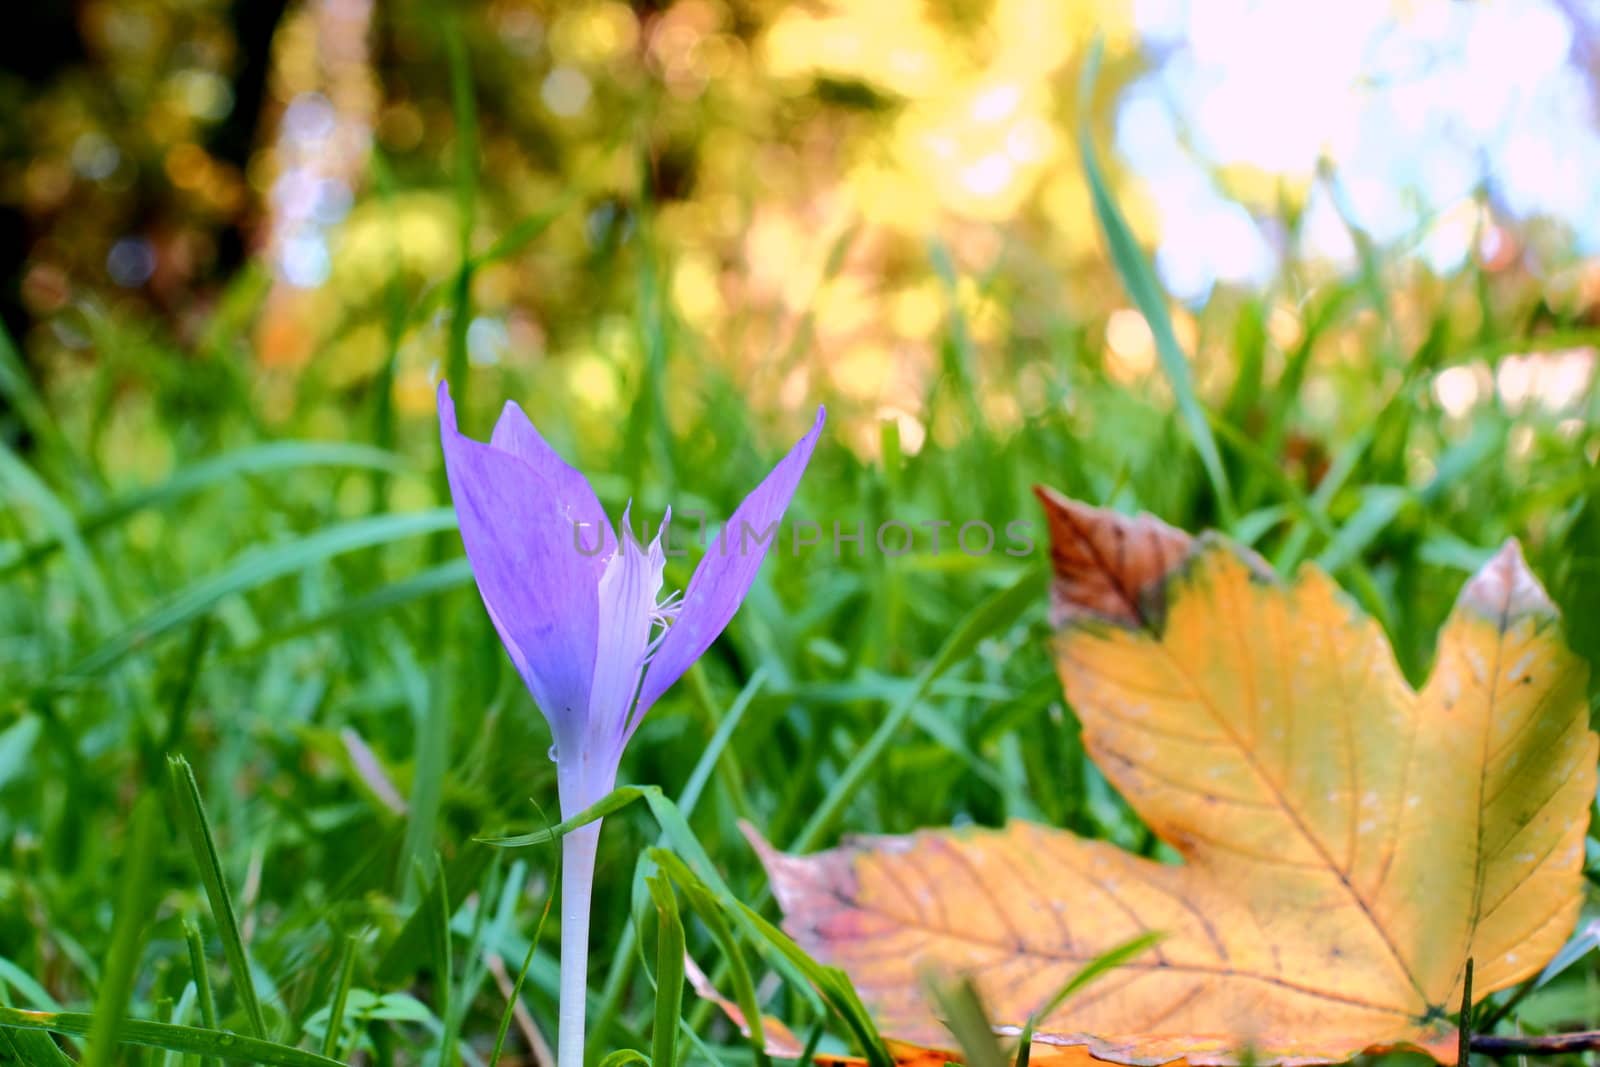 blue seasonal flower ( colchicum autumnale ) in the grass